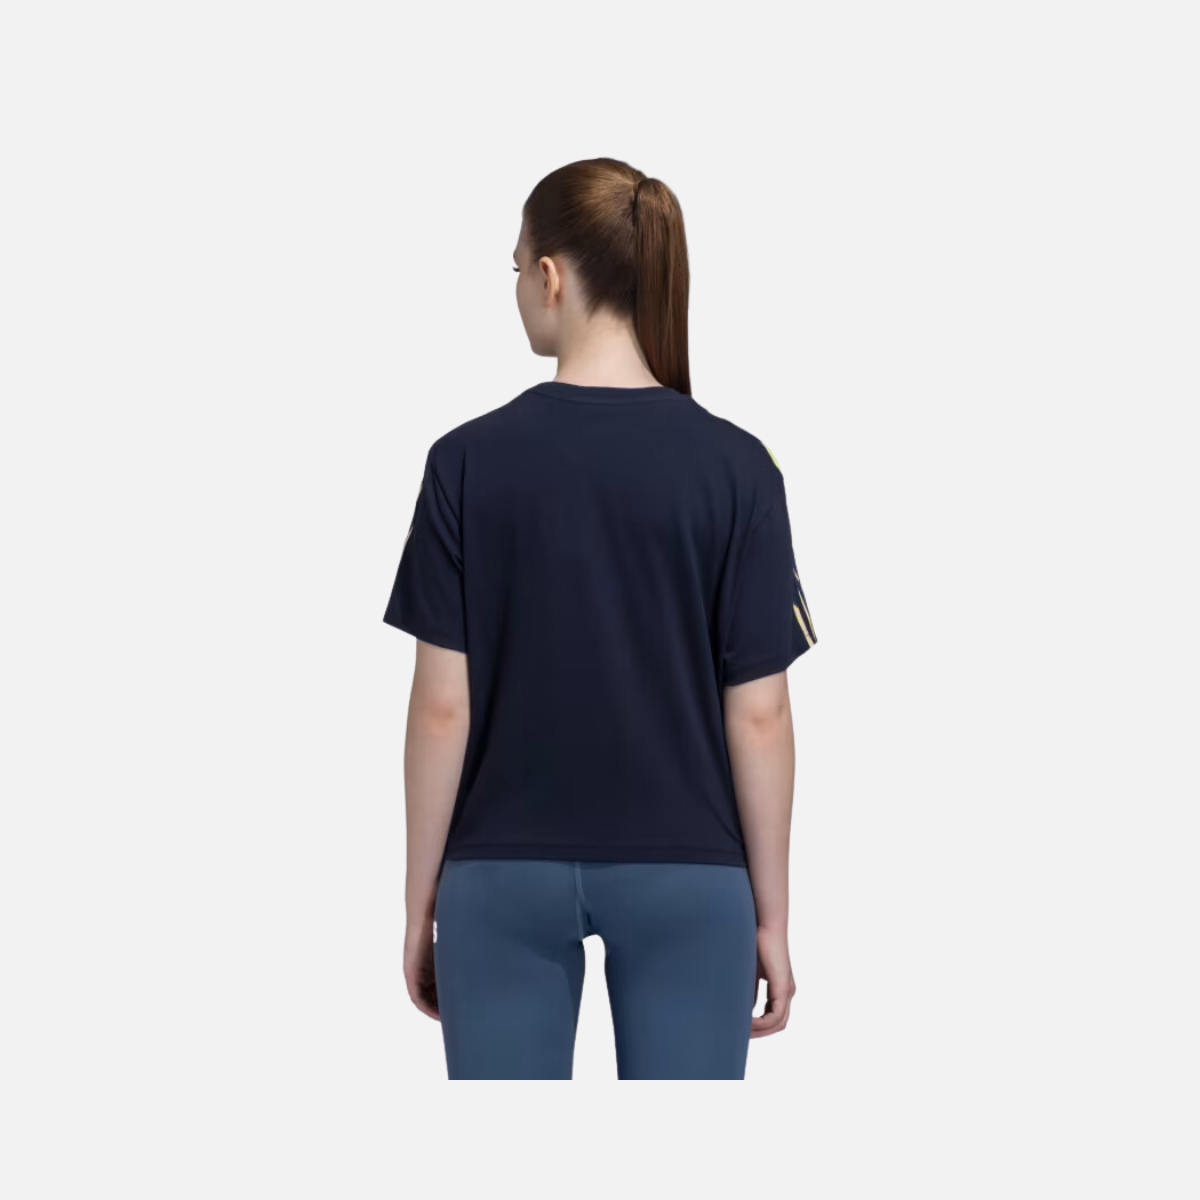 Adidas Vibaop 3S Women's T-shirt -Legend Ink/Multicolor